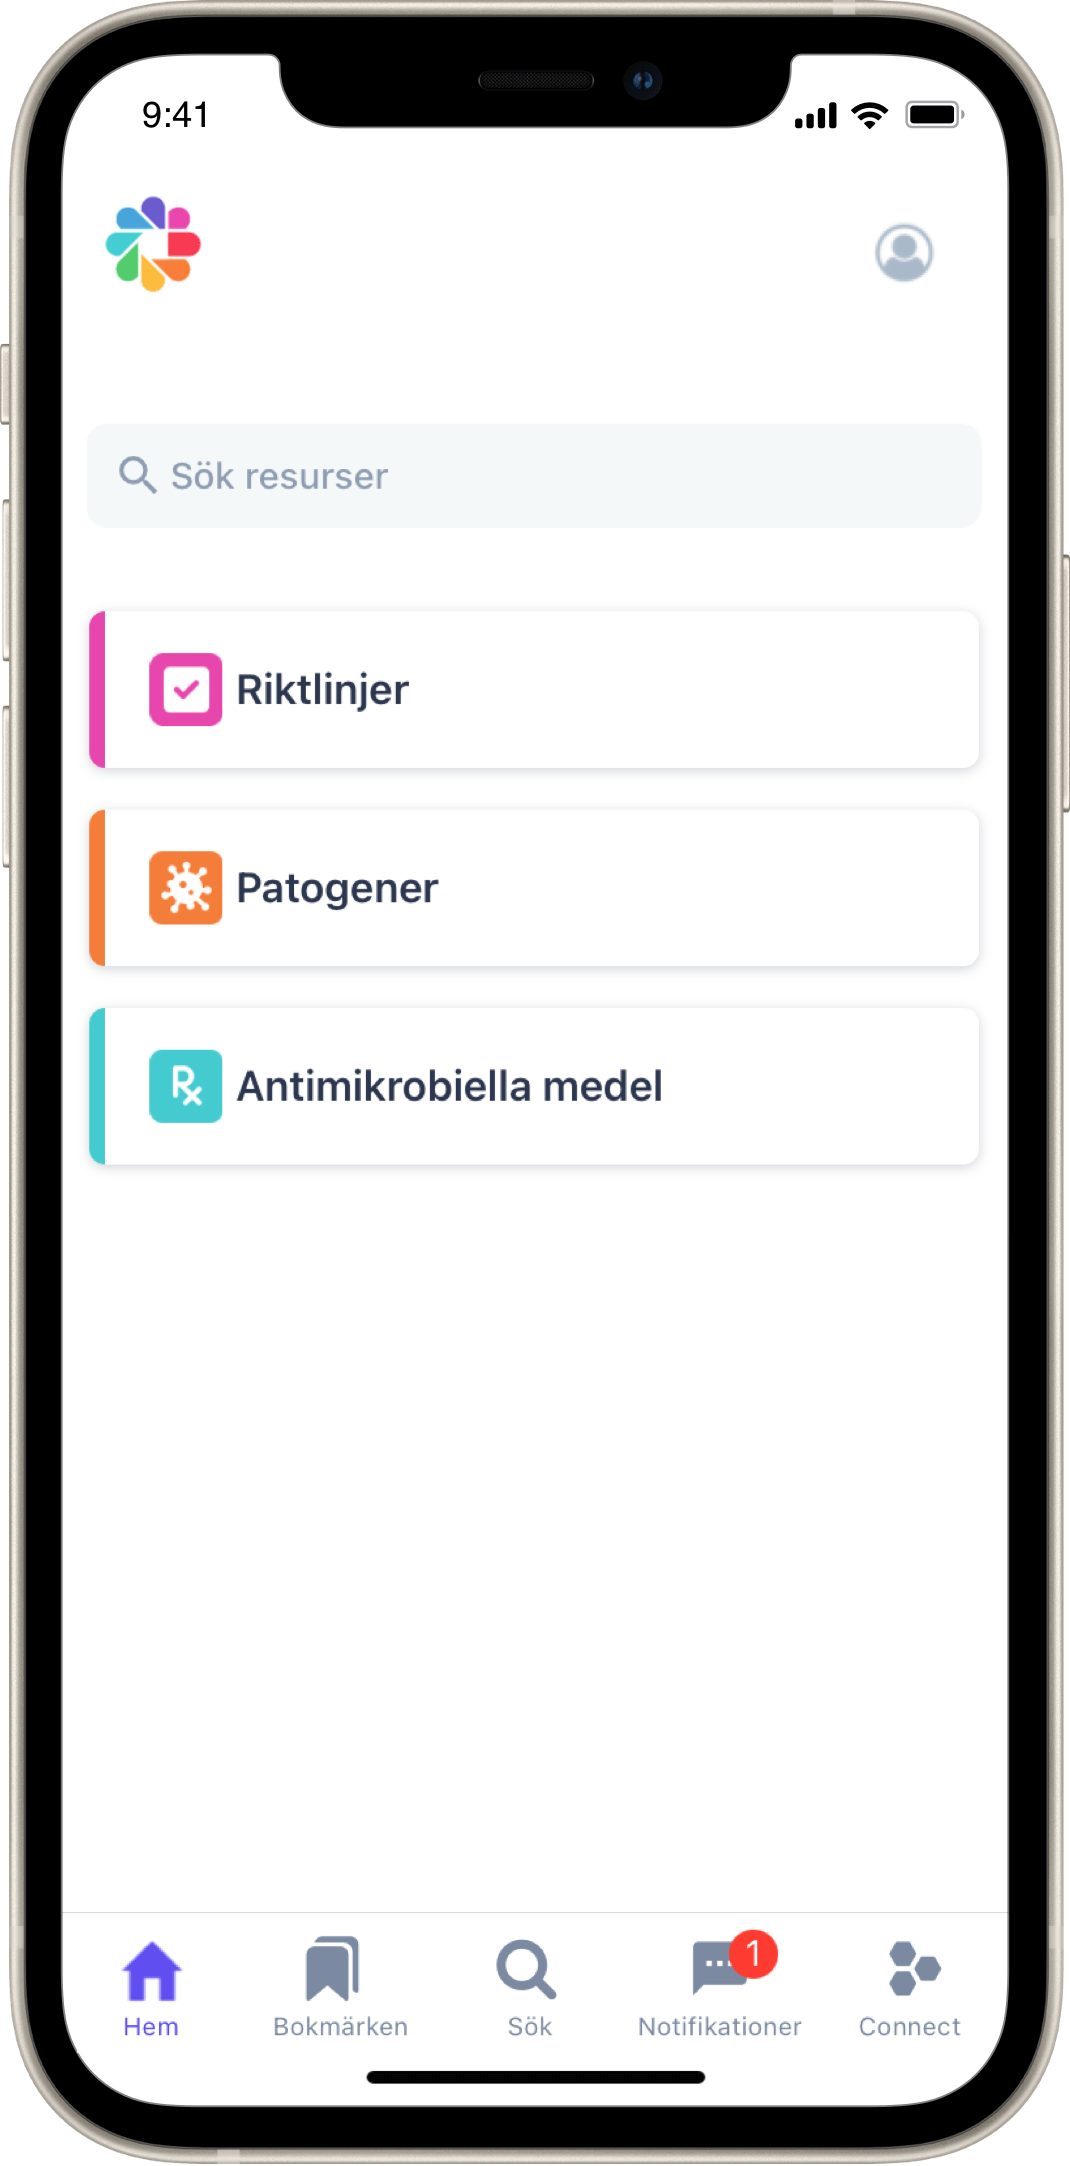 Firstline ID mobile app for Akademiska sjukhuset